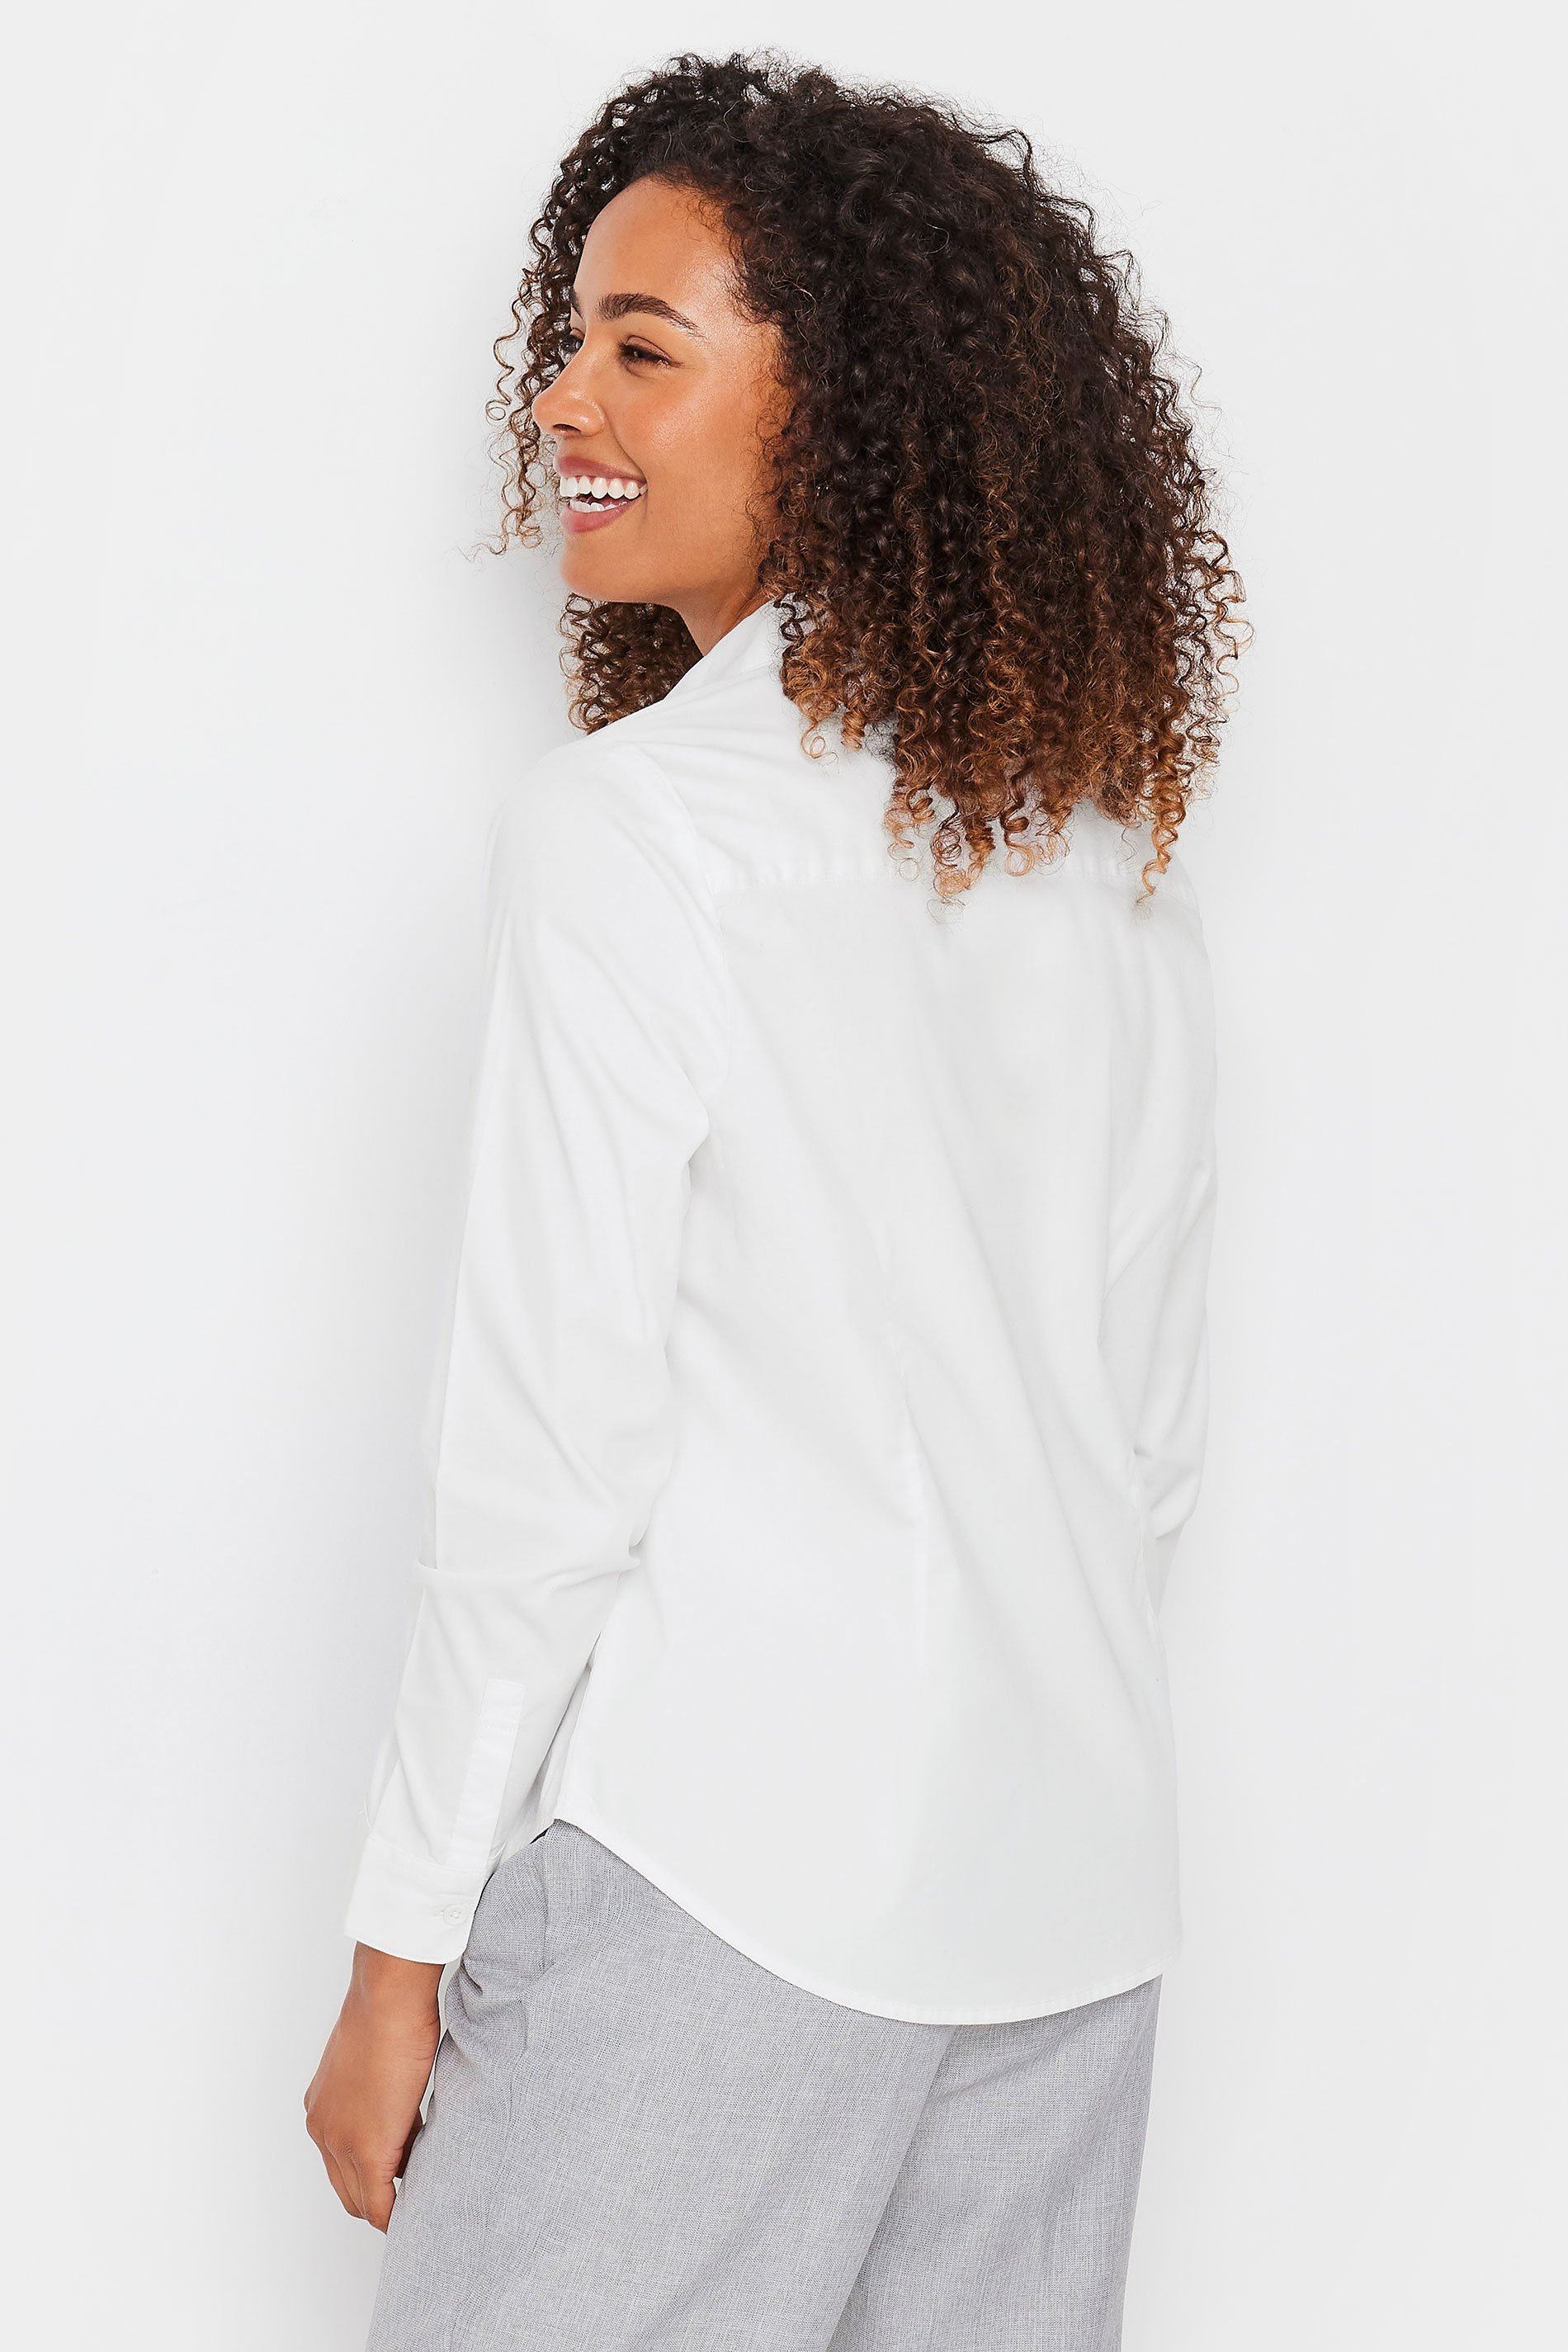 M&Co White Cotton Poplin Long Sleeve Shirt | M&Co 3